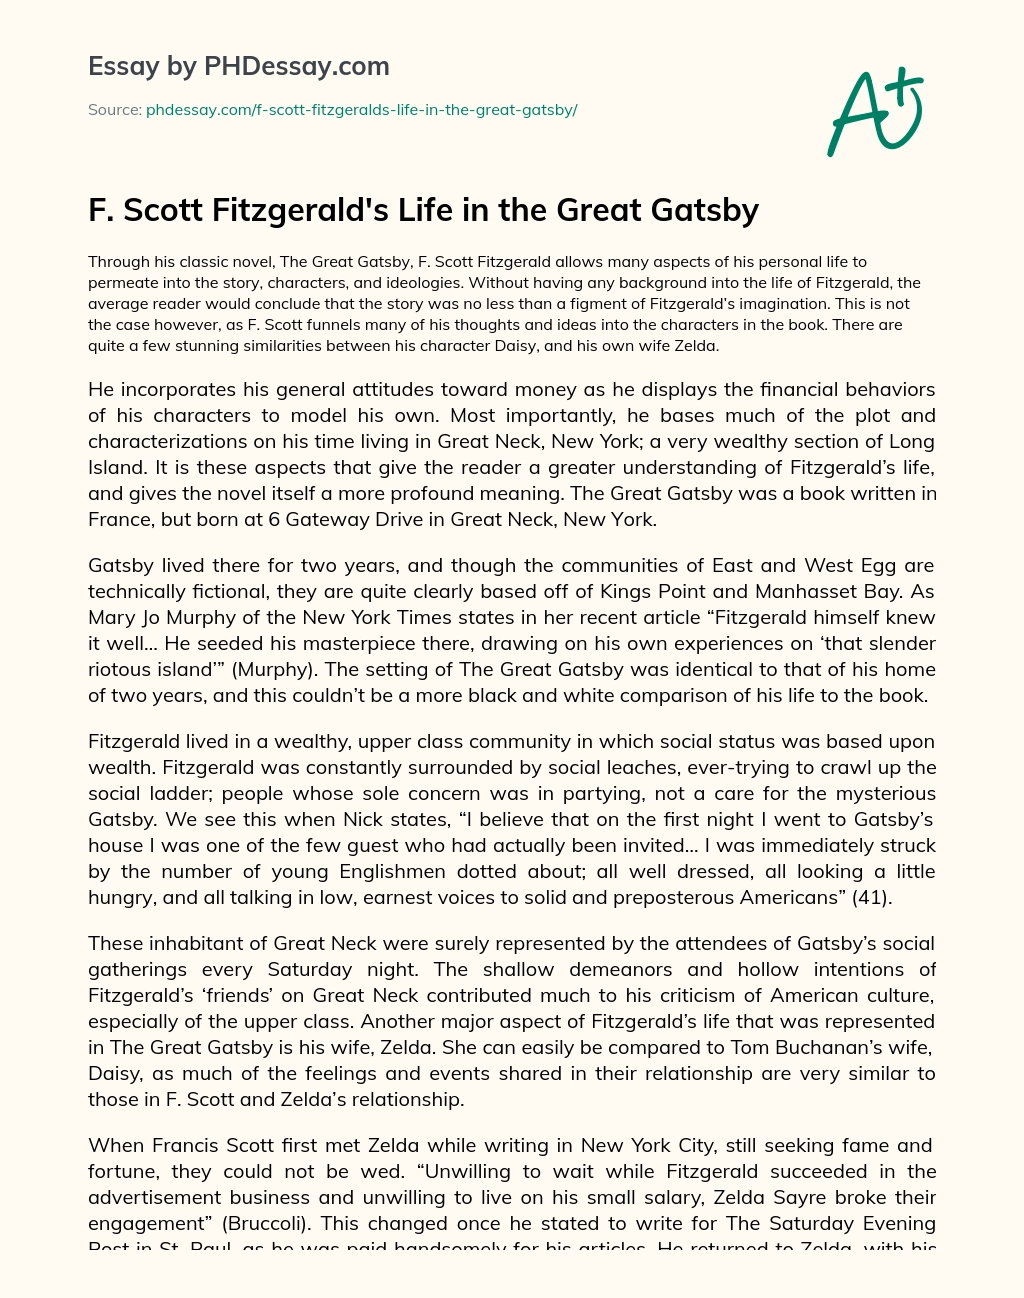 F. Scott Fitzgerald’s Life in the Great Gatsby essay